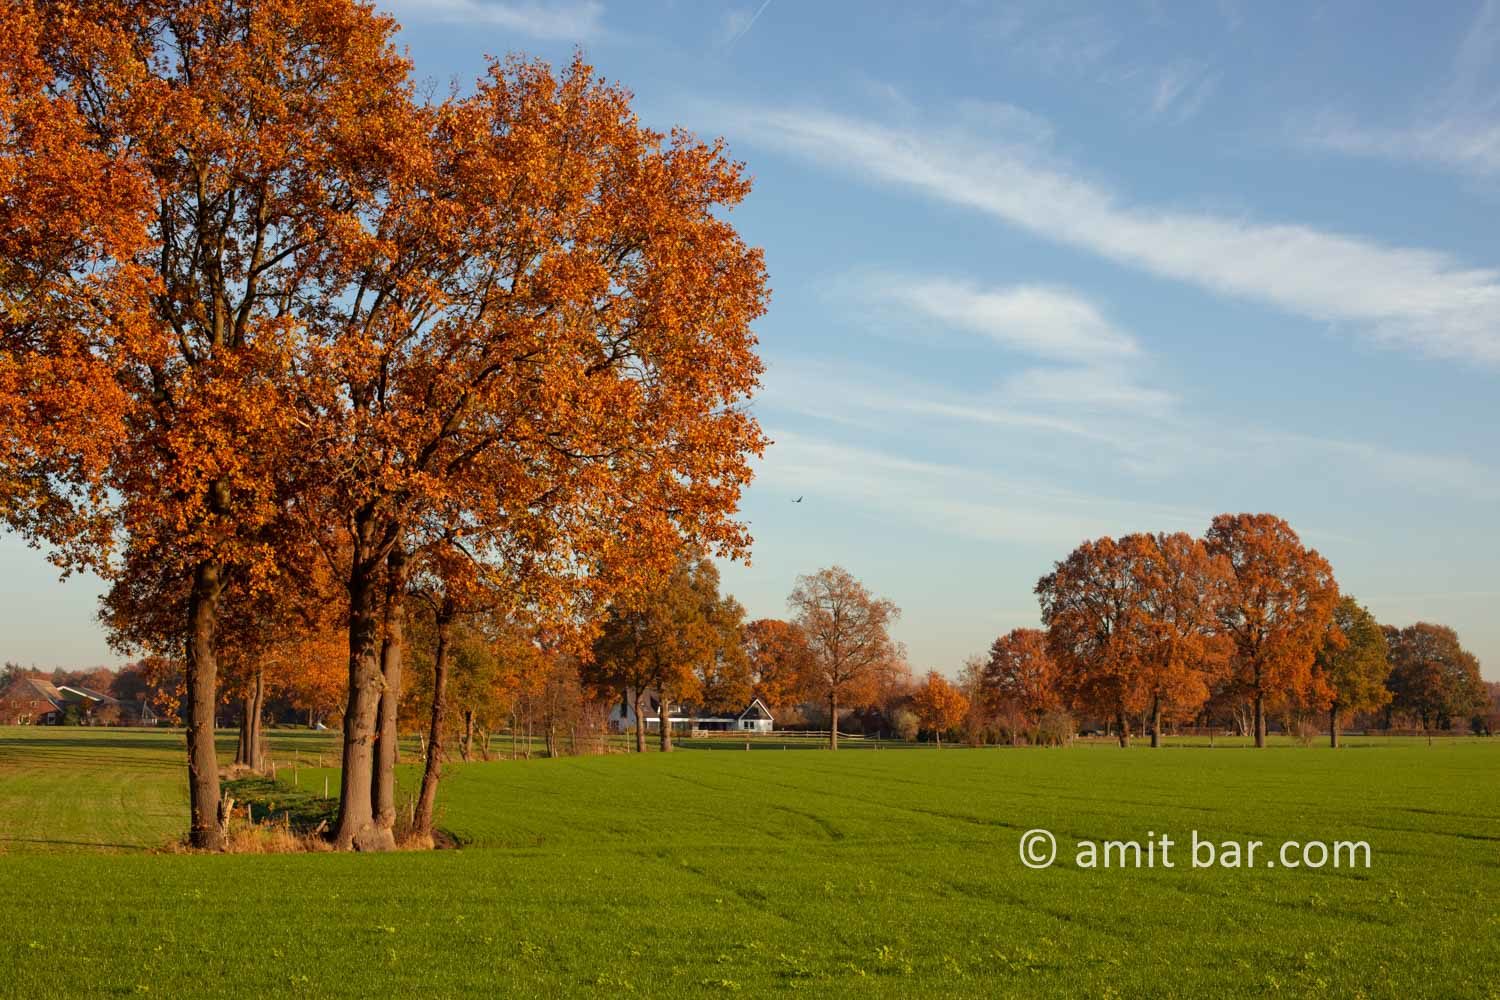 Autumn colors I: Autumn colors in the Achterhoek region, The Netherlands